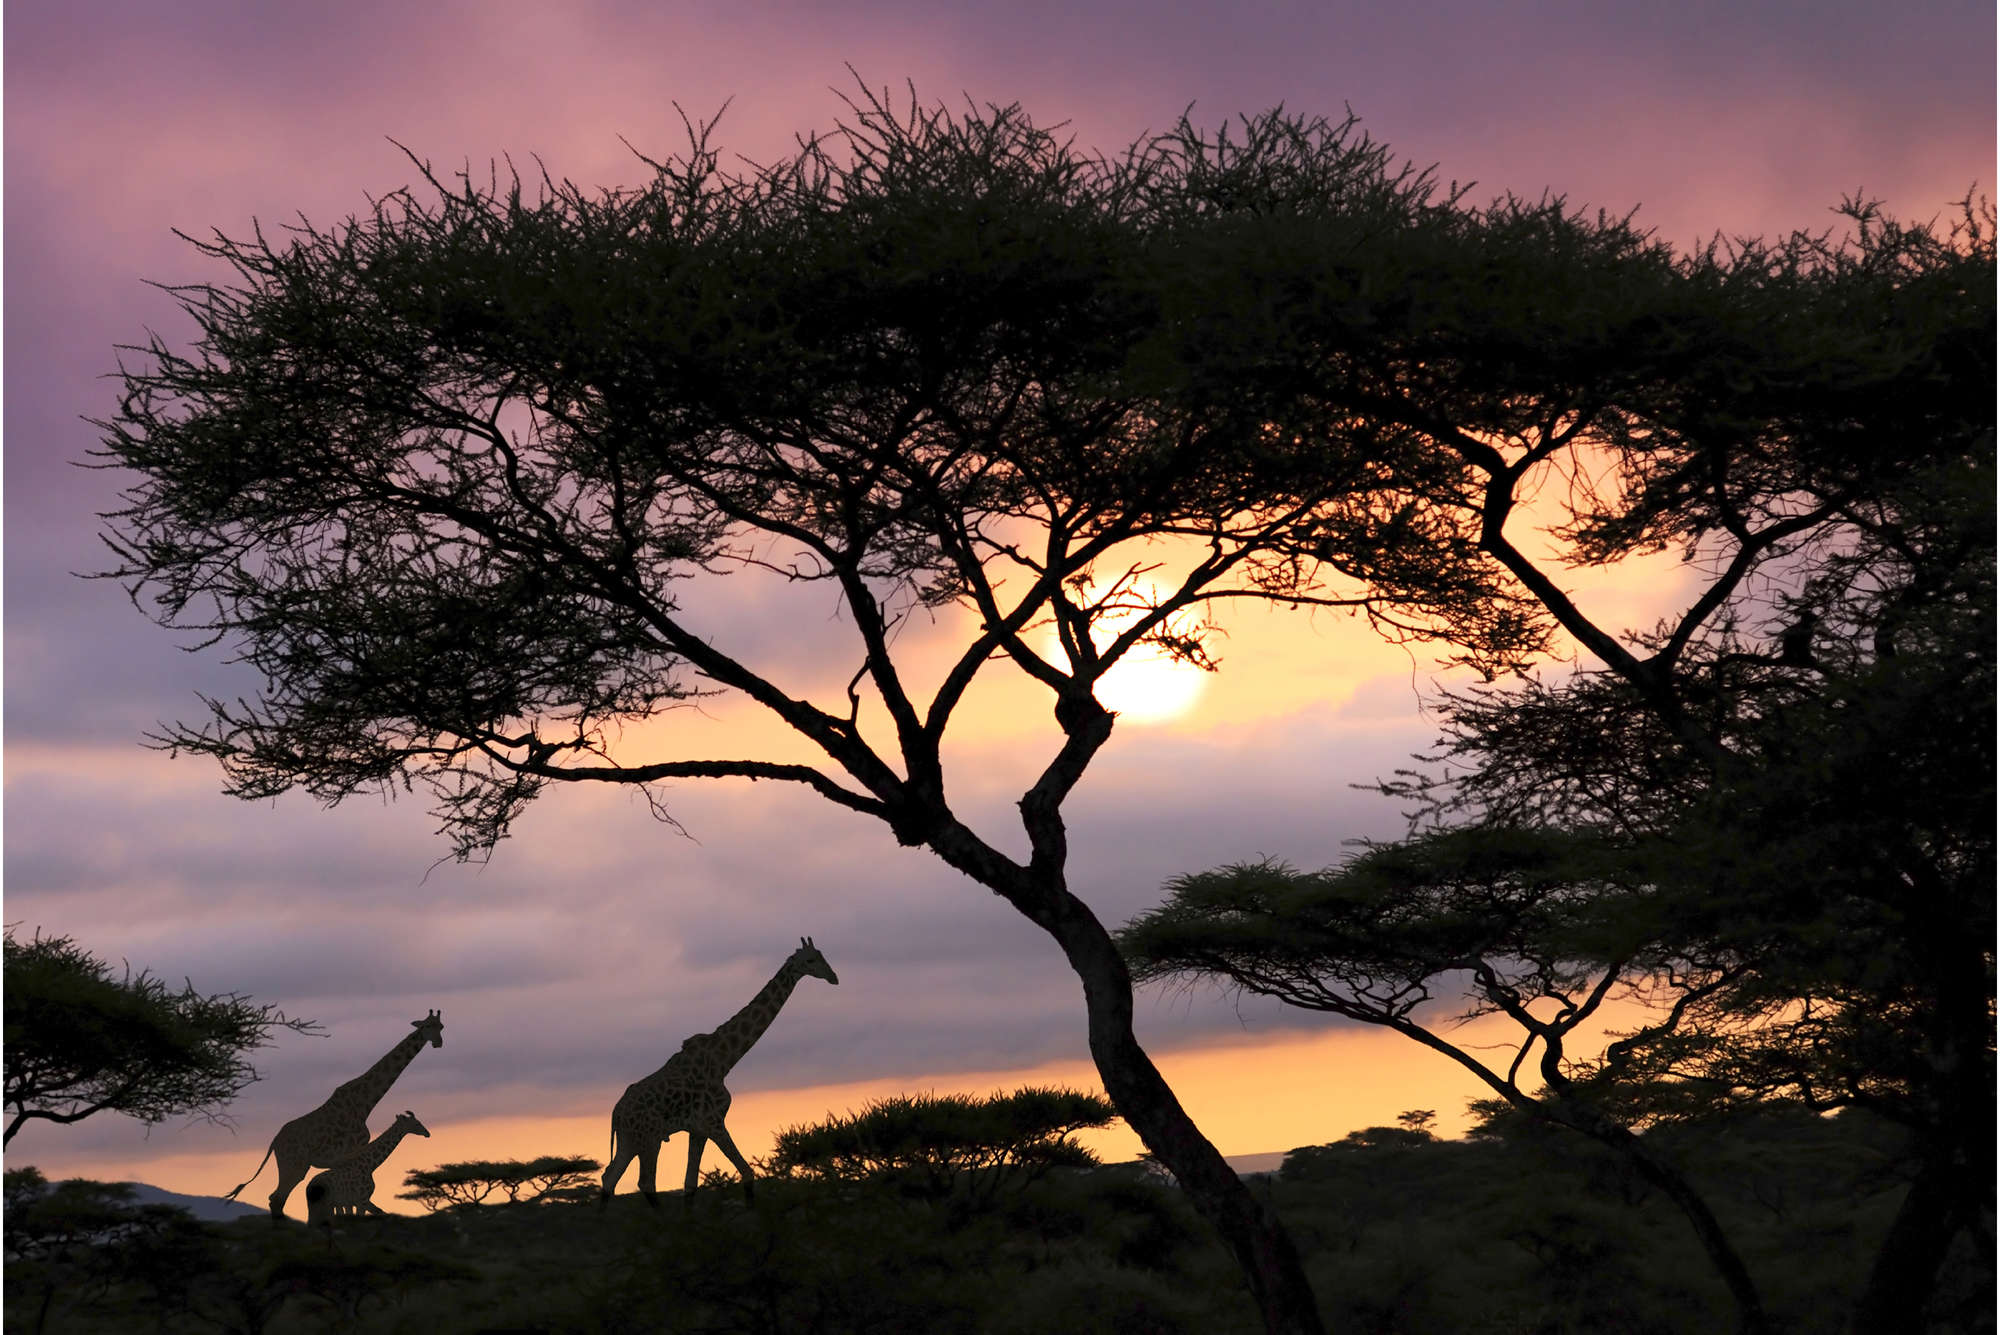             Fotomurali Savannah con giraffe - Pile liscio di qualità superiore
        